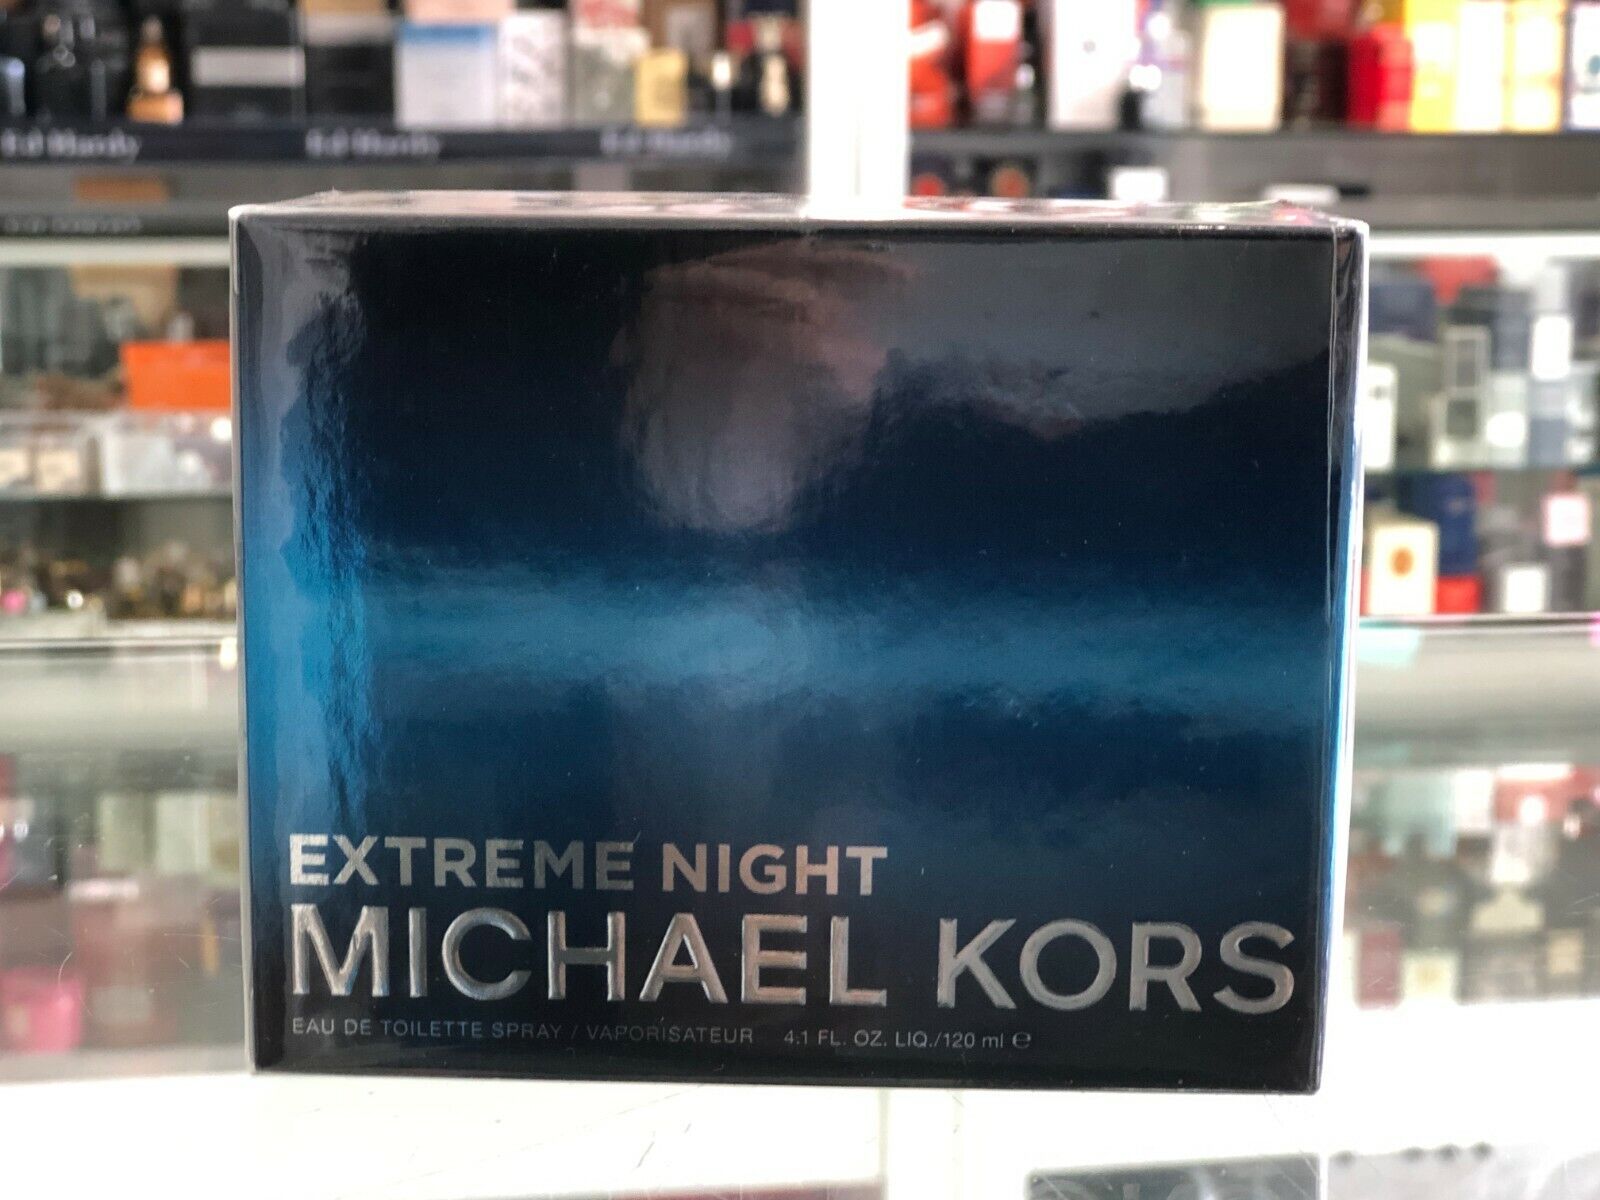 EXTREME NIGHT BY MICHAEL KORS EAU DE TOILETTE SPRAY 120 ML COMPANY SEALED